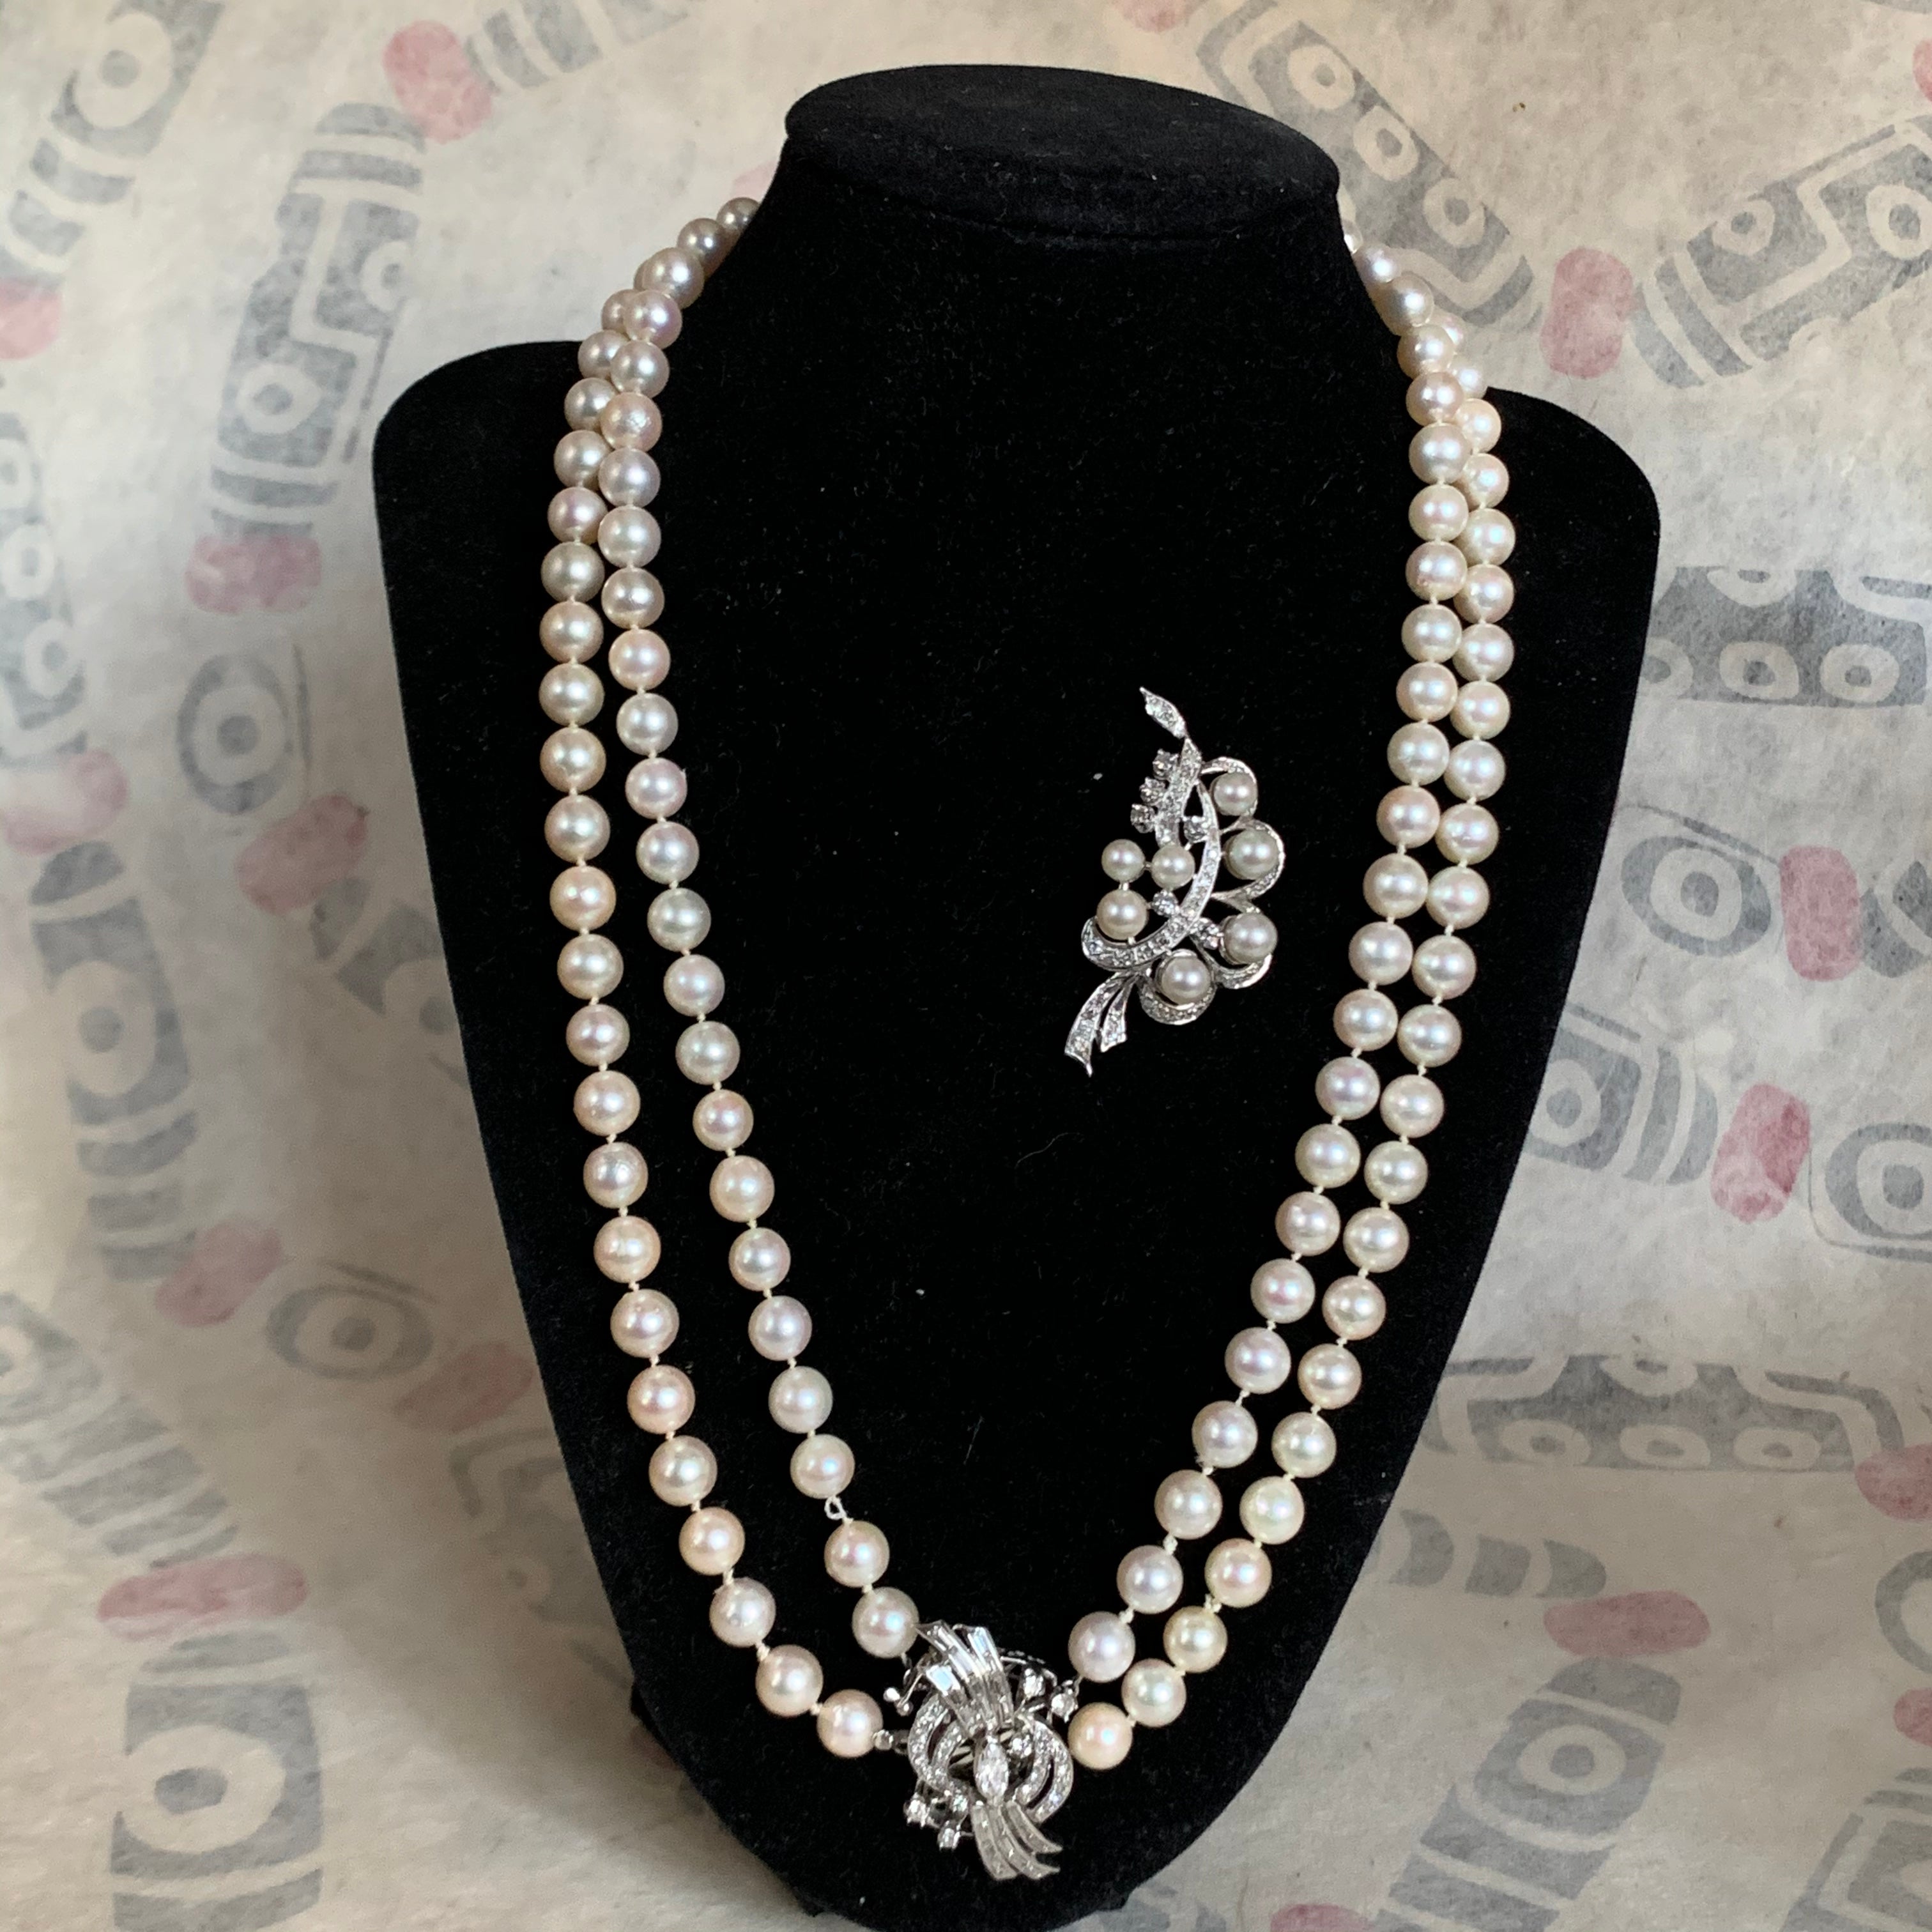 Single Strand Cultured Pearl Necklace w/14k White Gold Diamond Clasp